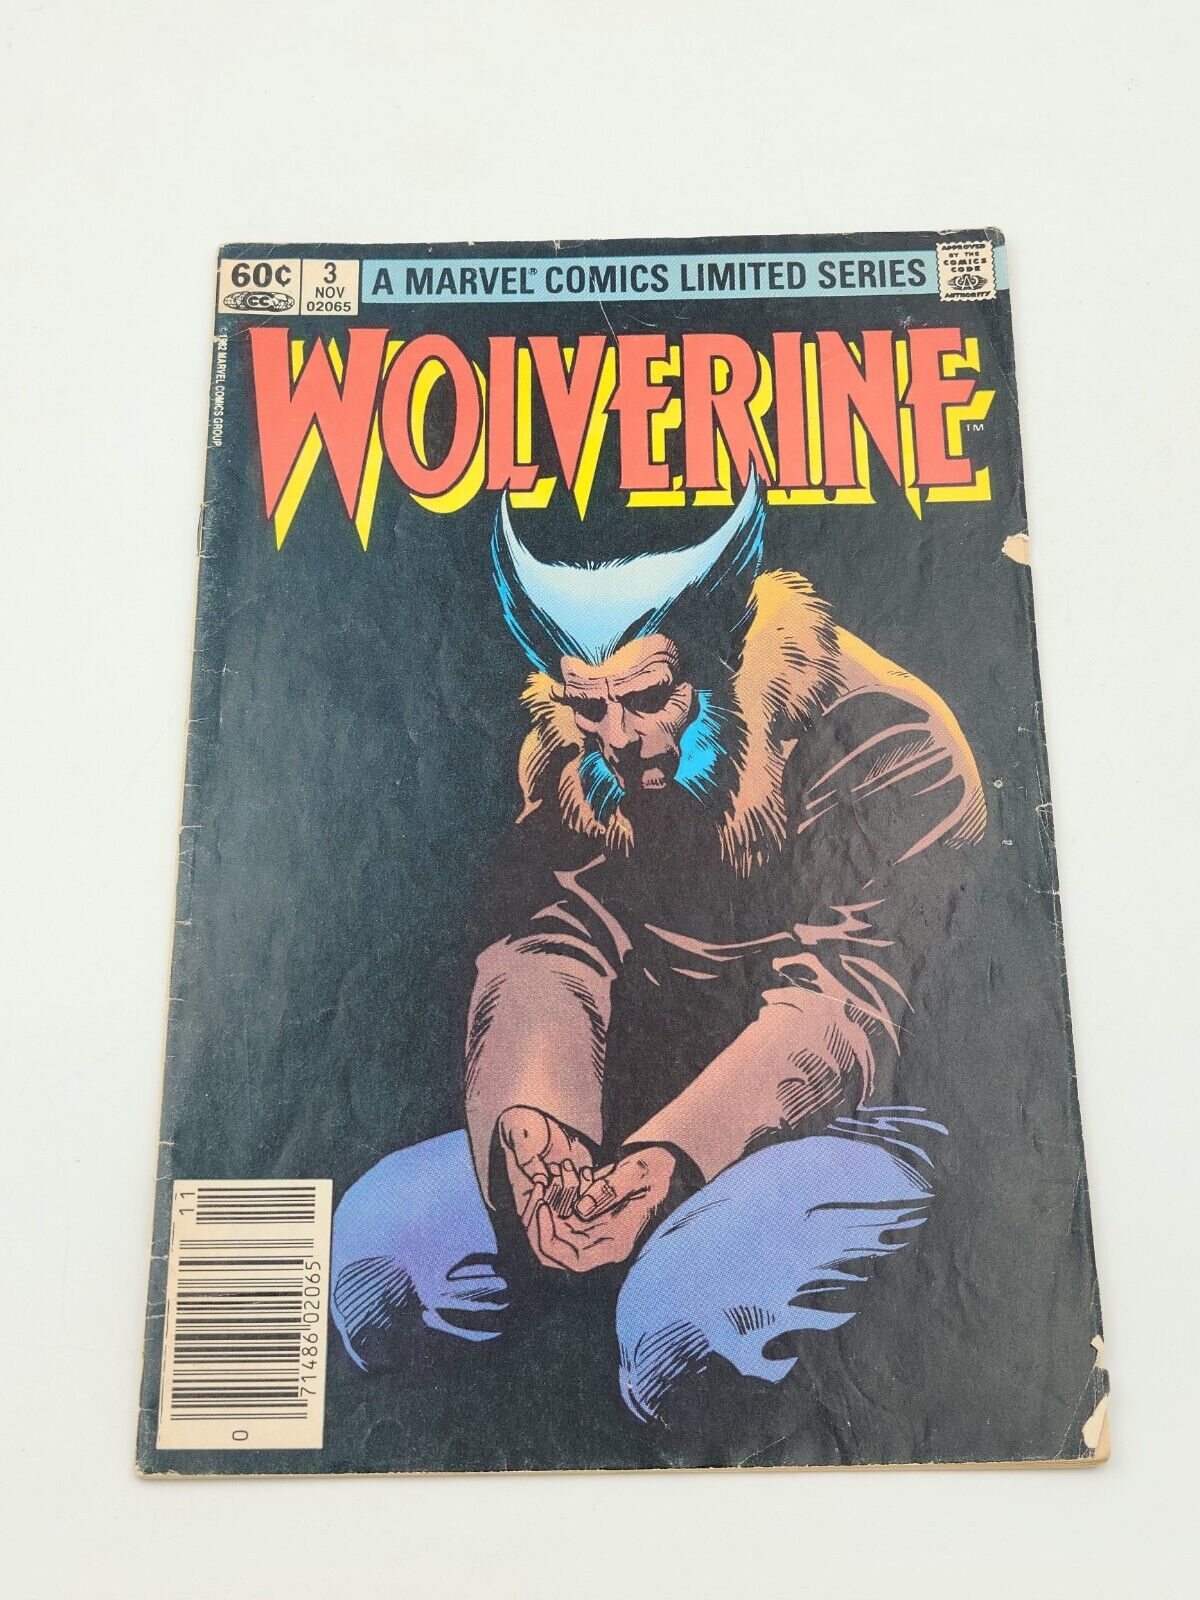 Wolverine #3 Frank Miller Mini Series Nov 1982 Marvel Comics MCU Disney+